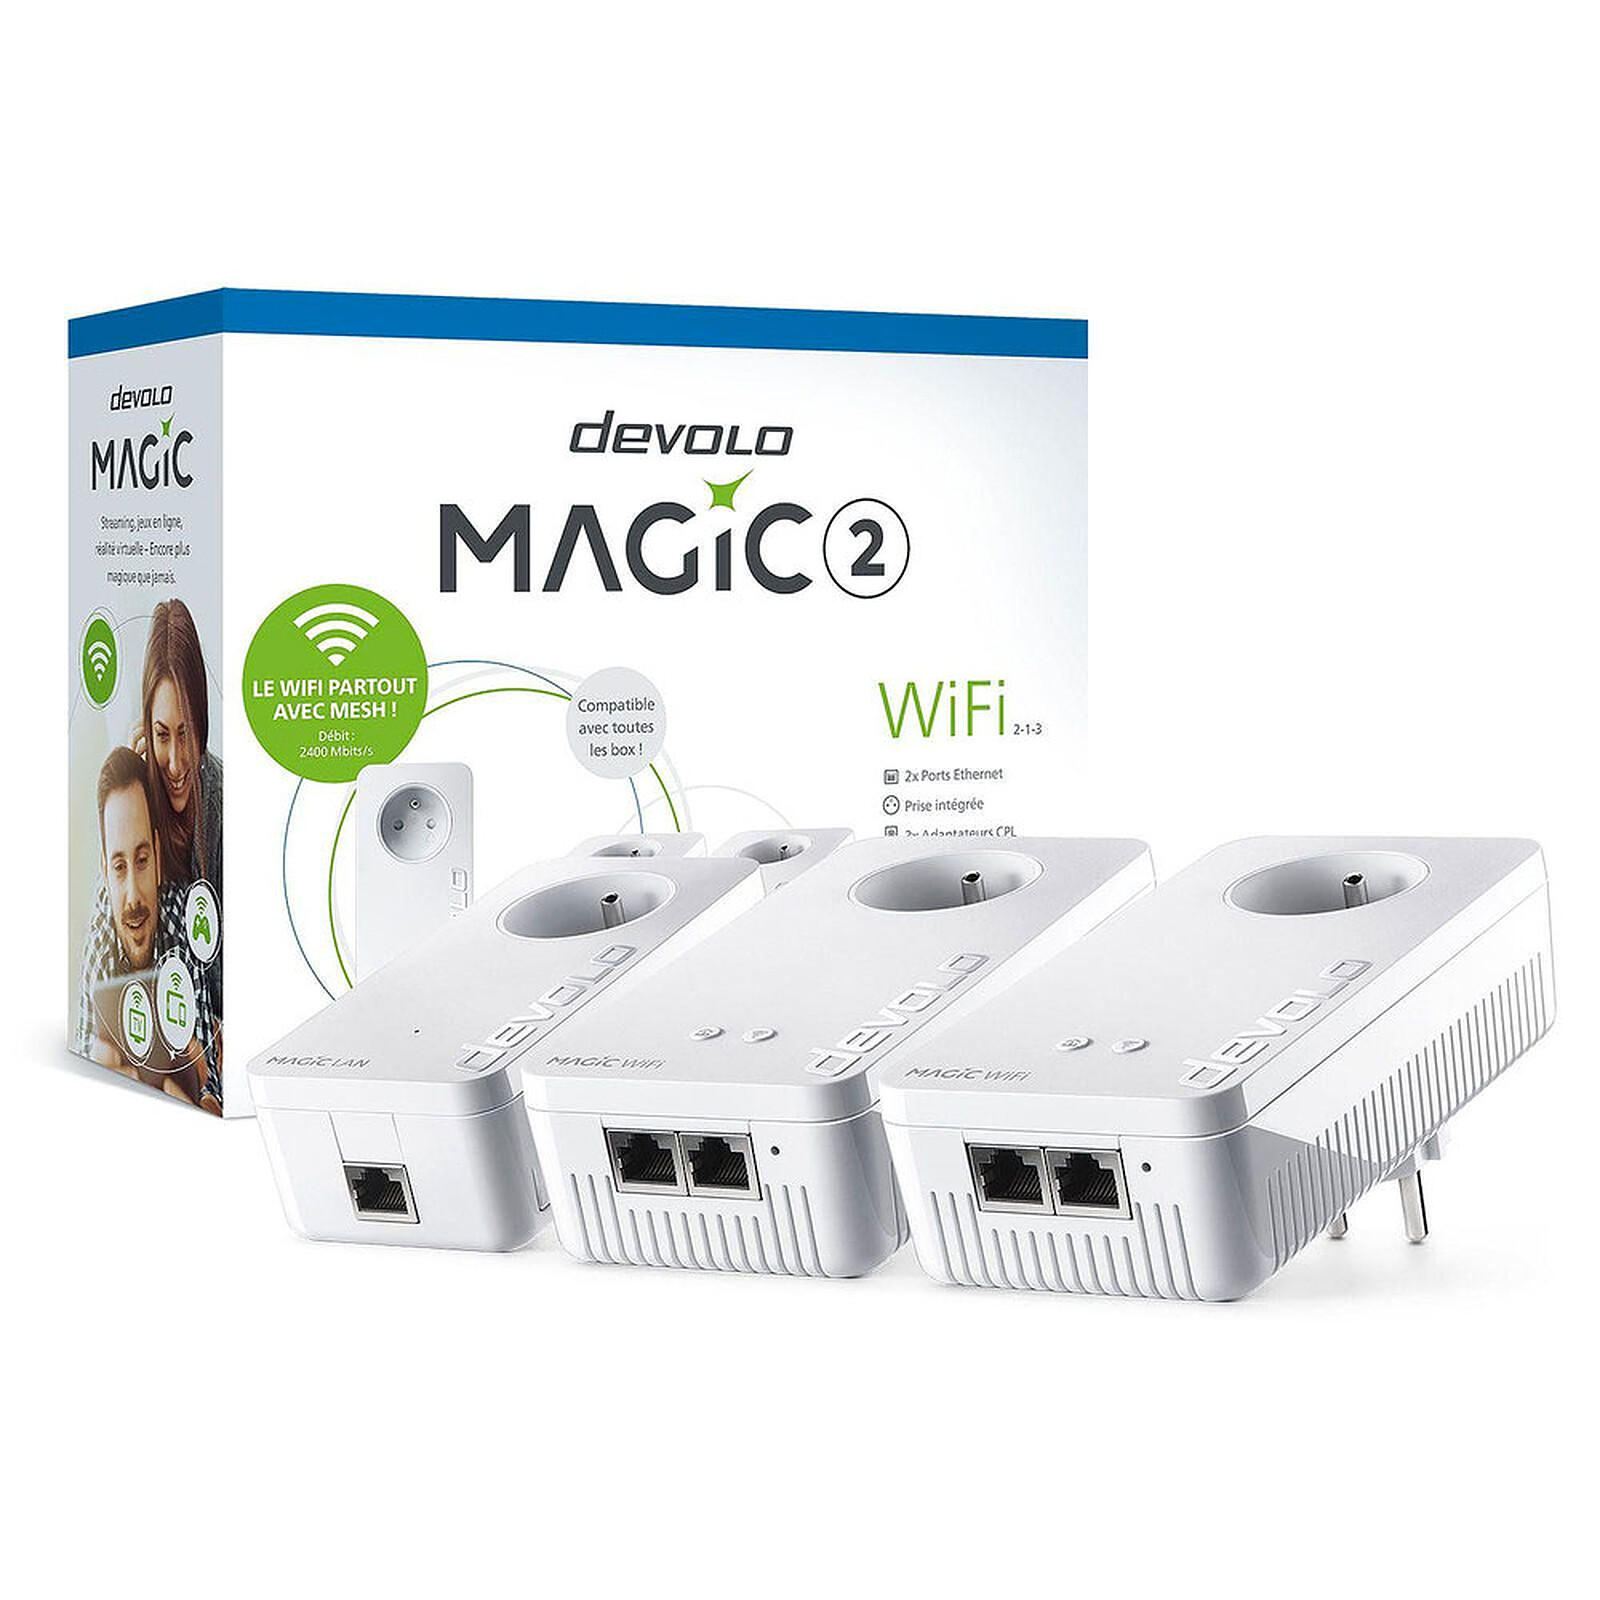 devolo Magic 2 WiFi next - Multiroom Kit - Powerline adapter - LDLC 3-year  warranty